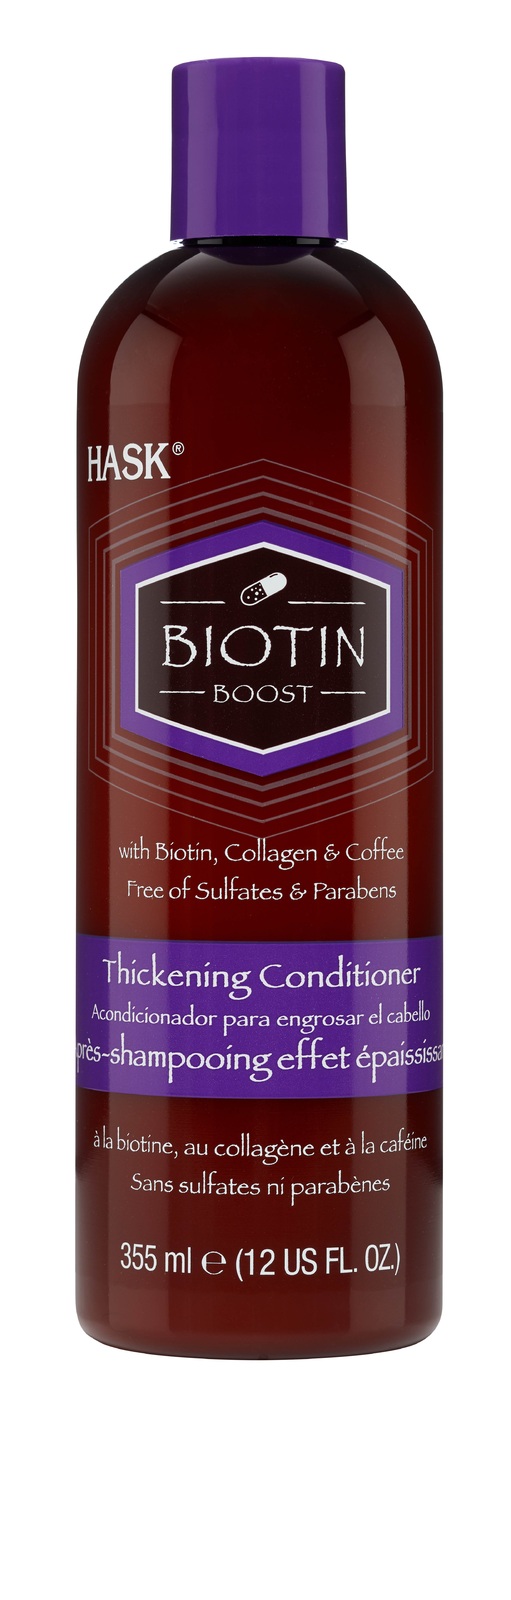 Hask Biotin Boost Thickening Conditioner kopen